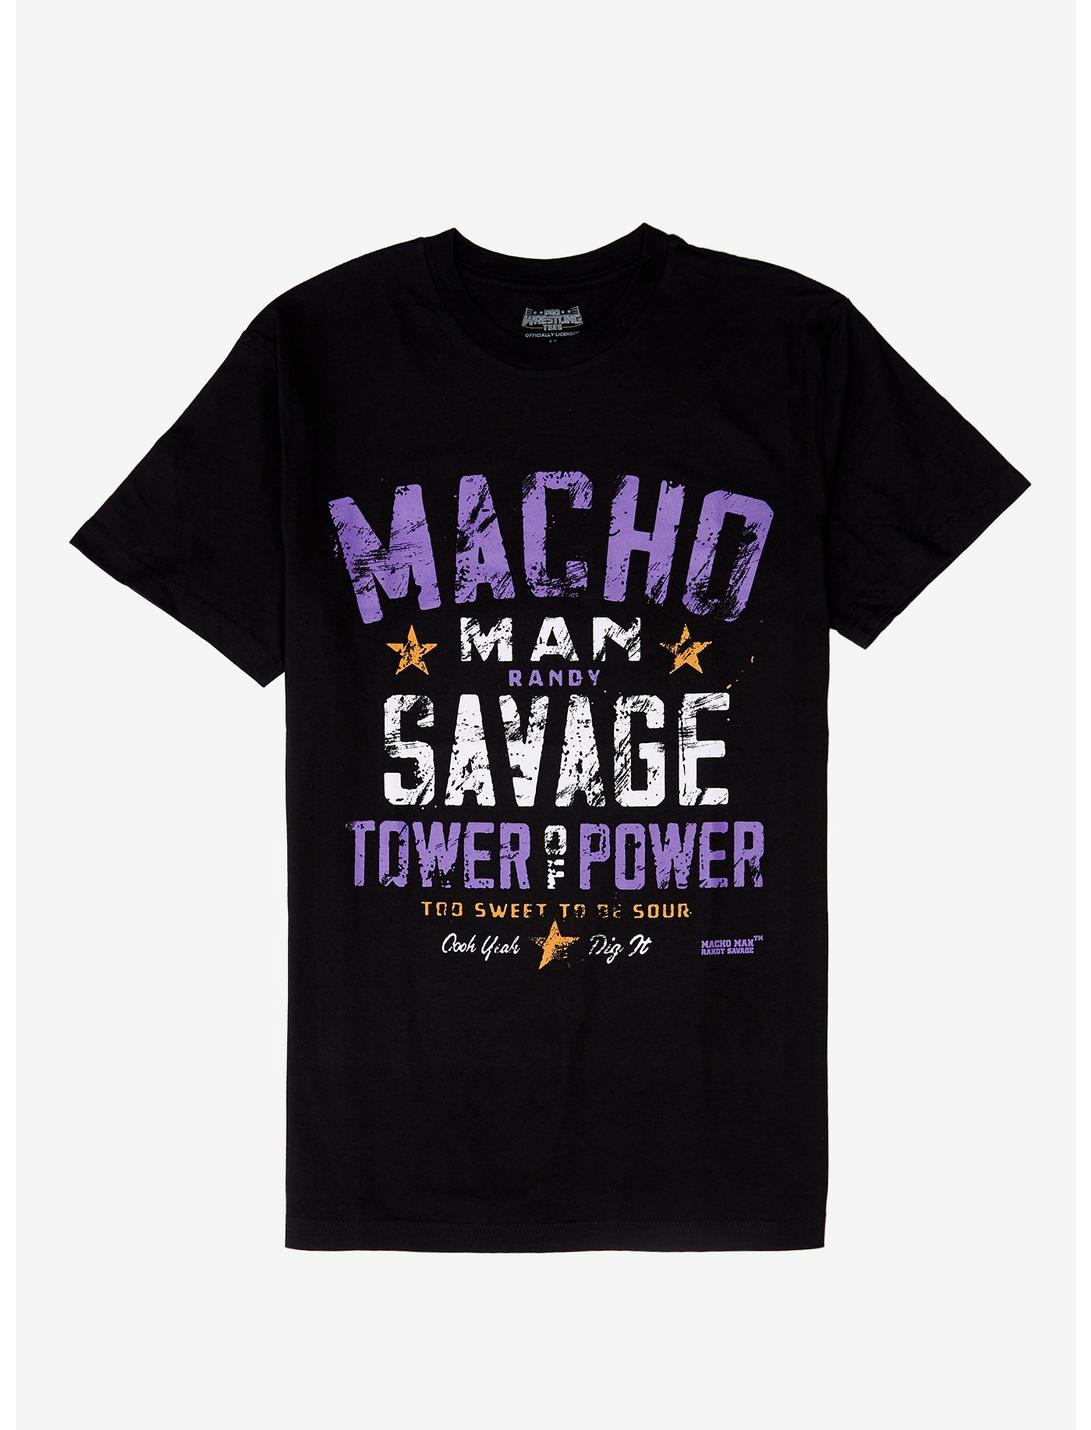 Pro-Wrestling Macho Man Tower Of Power T-Shirt, BLACK, hi-res